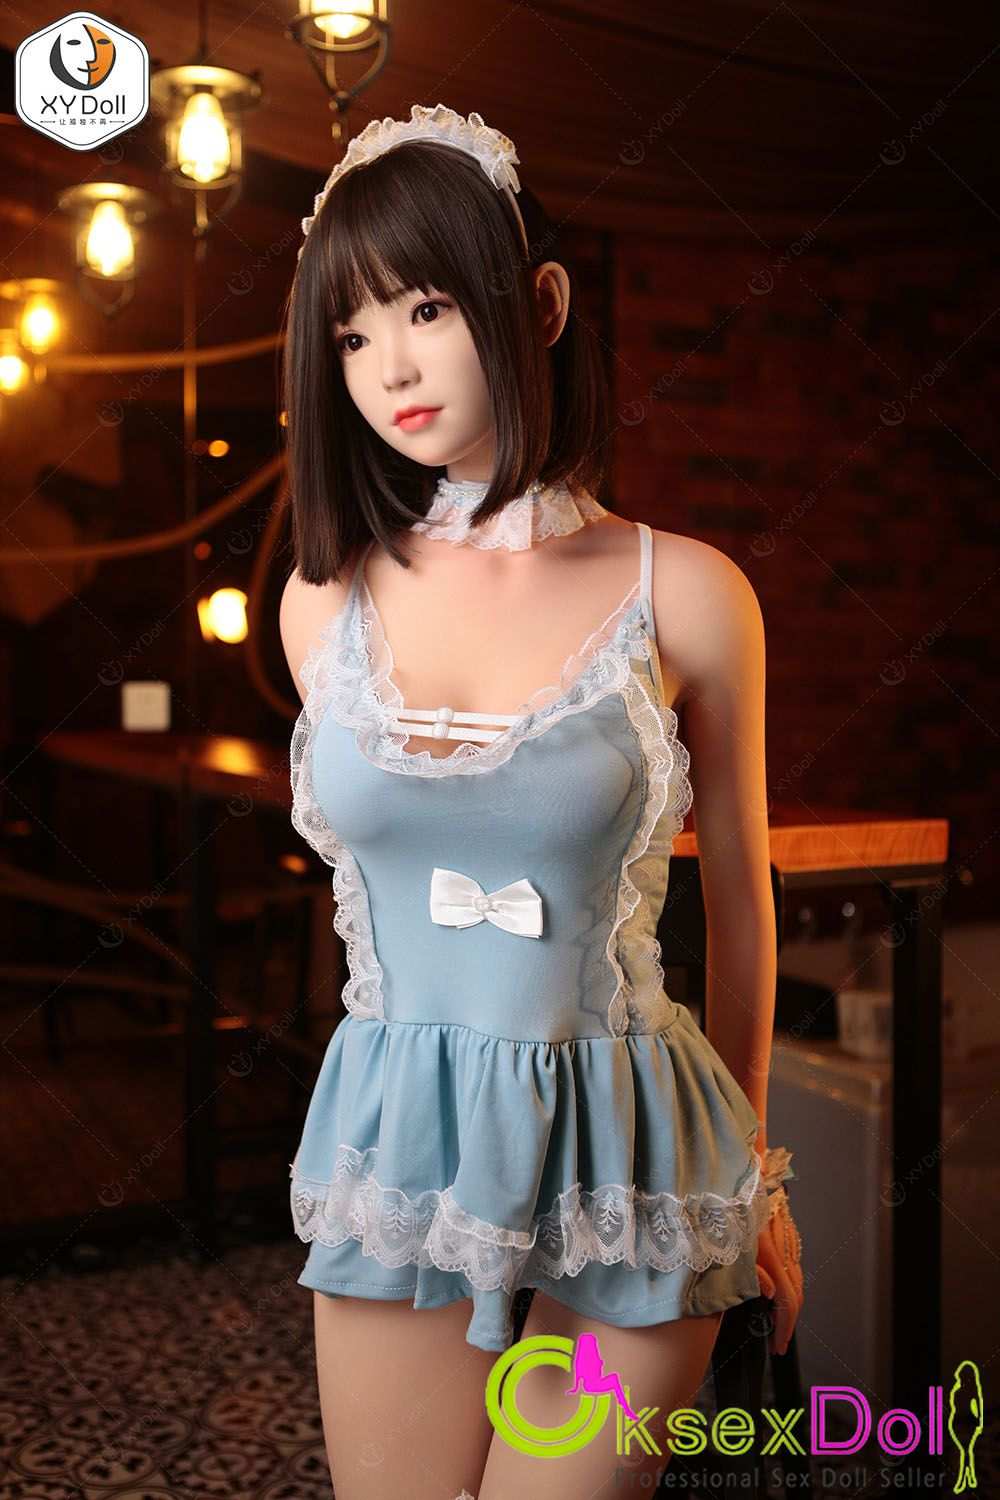 Young Sex Doll Image of Akiara